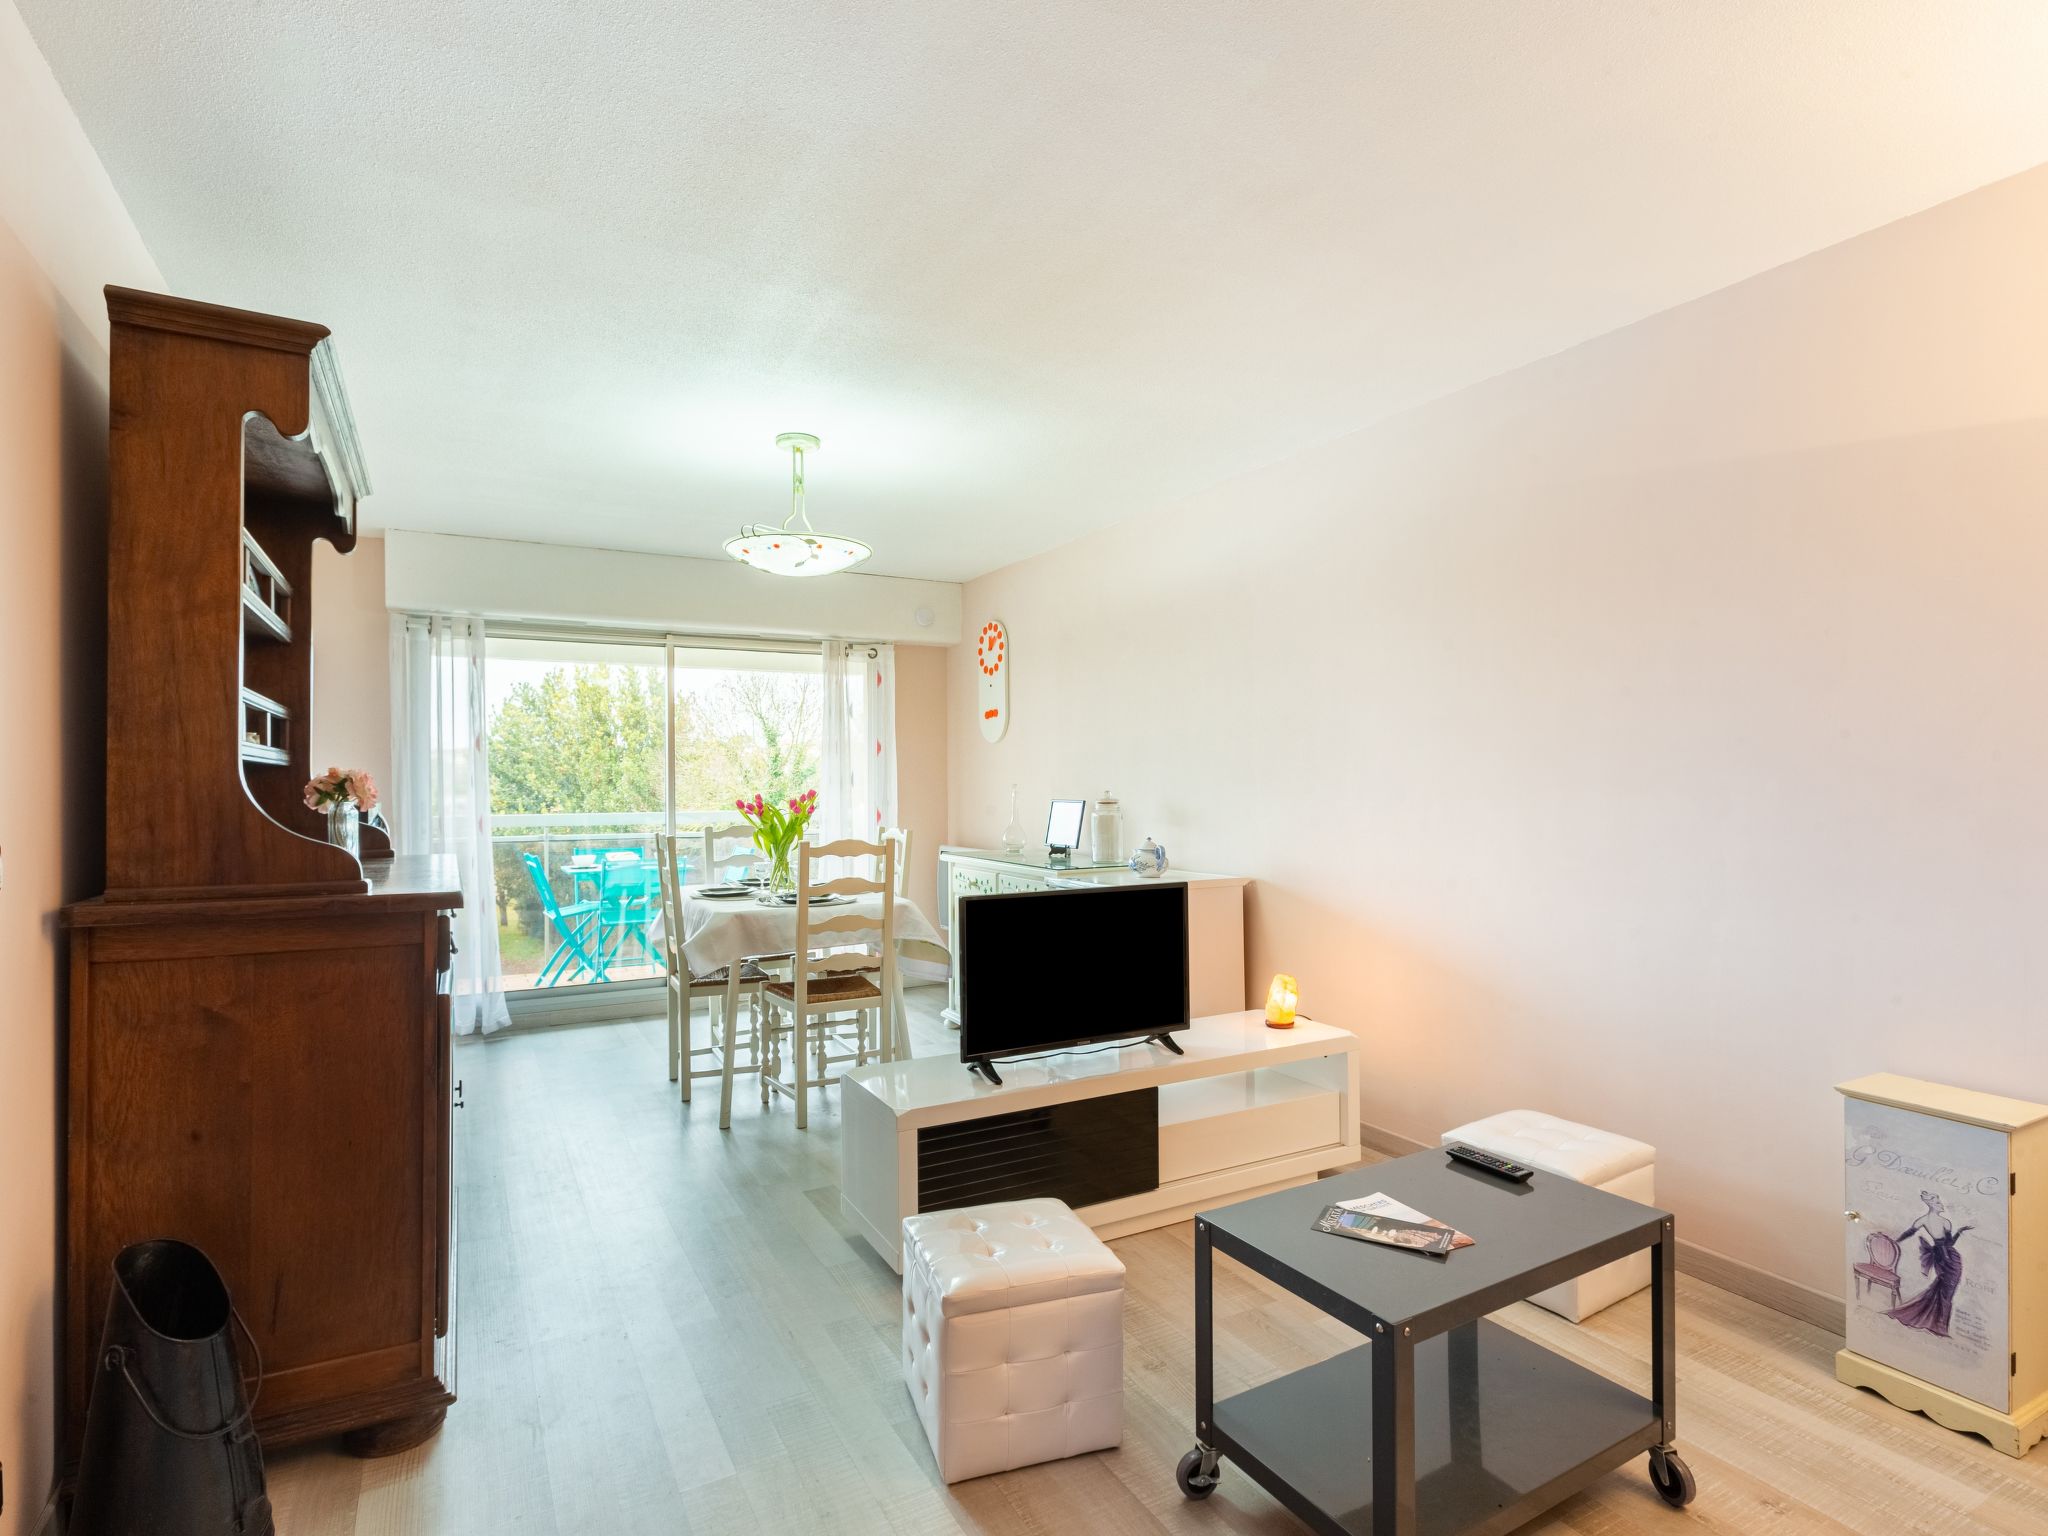 Photo 6 - Appartement de 1 chambre à Meschers-sur-Gironde